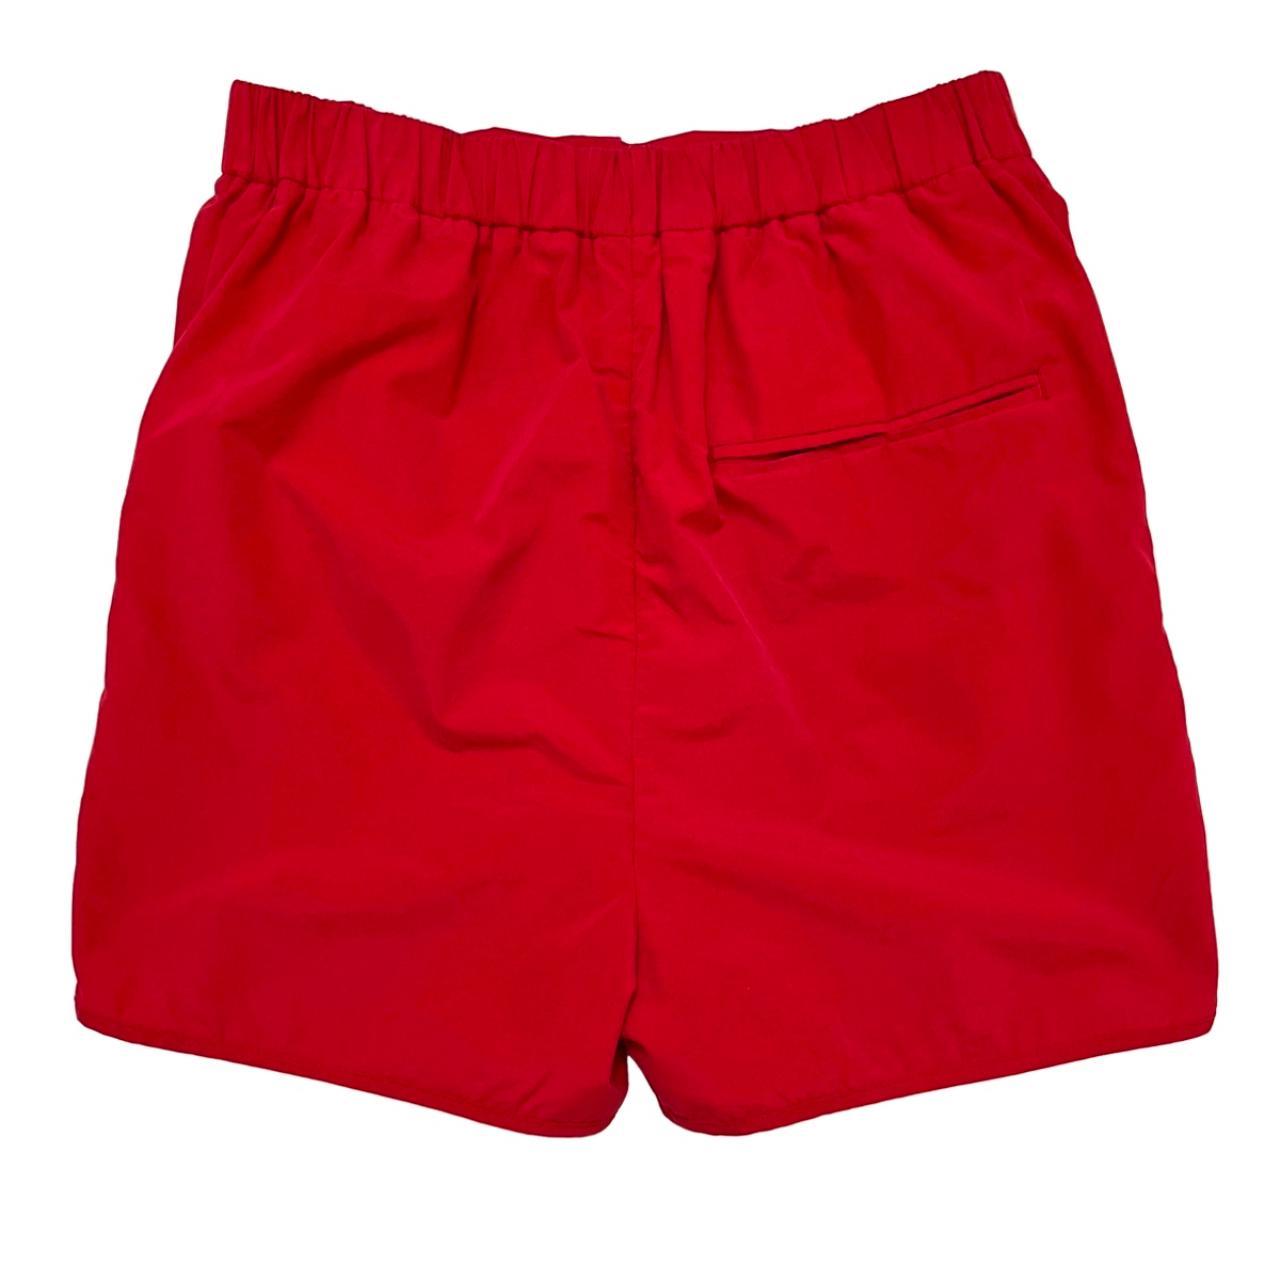 Product Image 2 - Henrik Vibskov Elastic-Waist Drop-Crotch Shorts

New